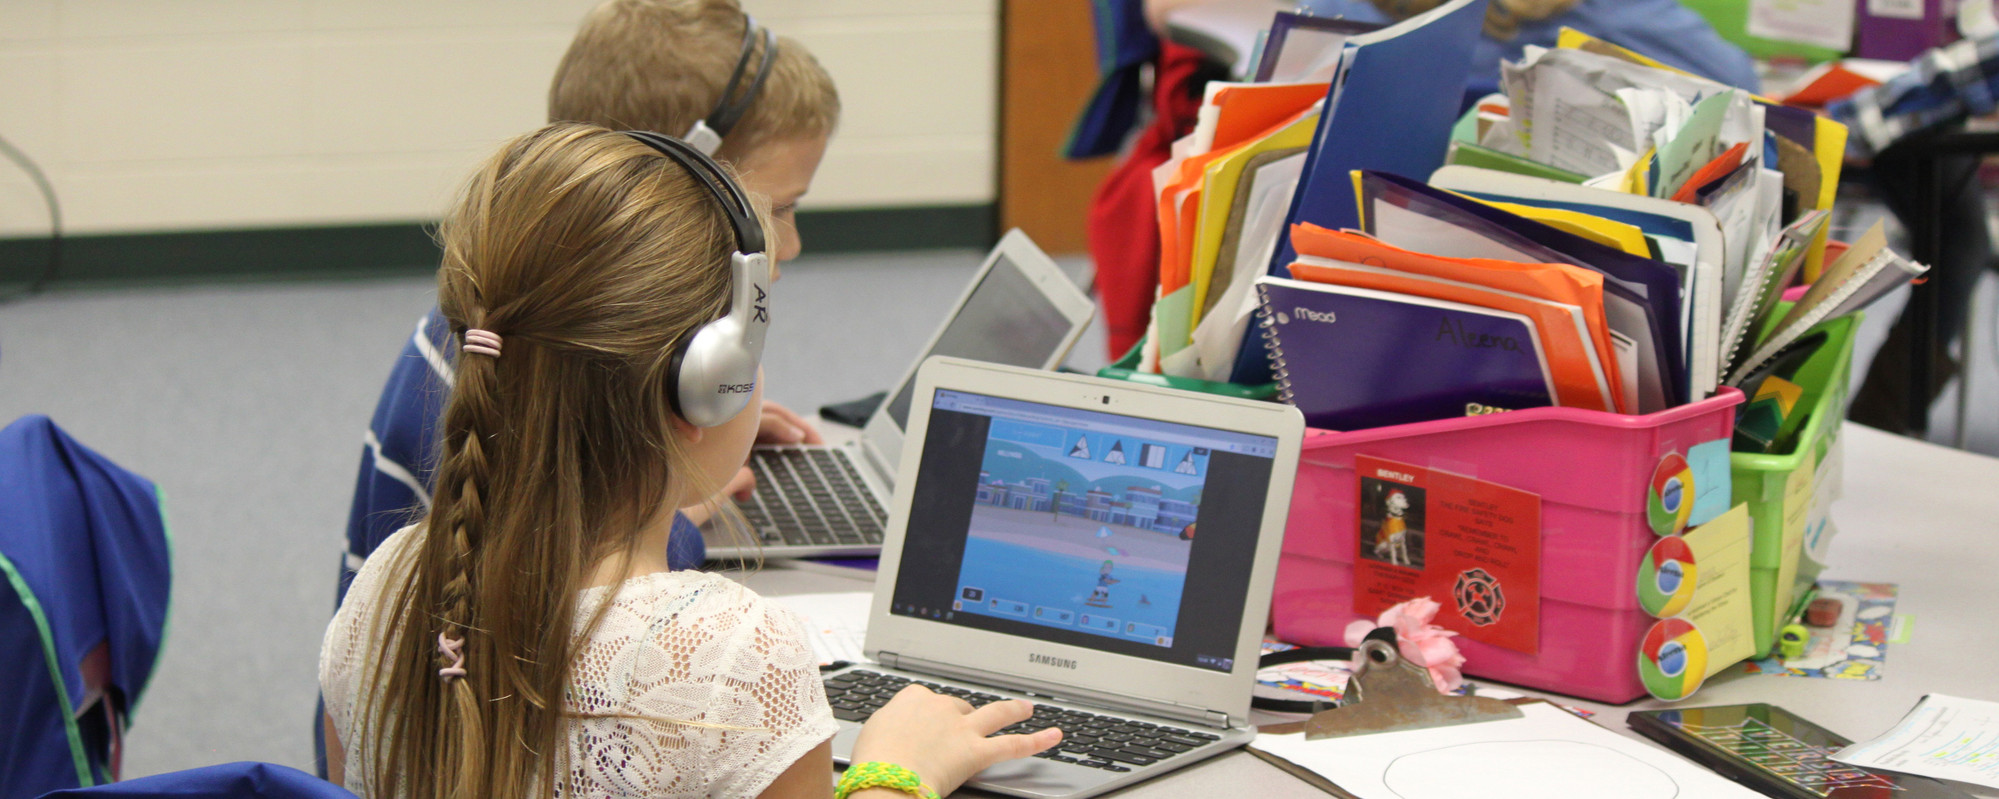 St. Germain Elementary School - Students on Laptops